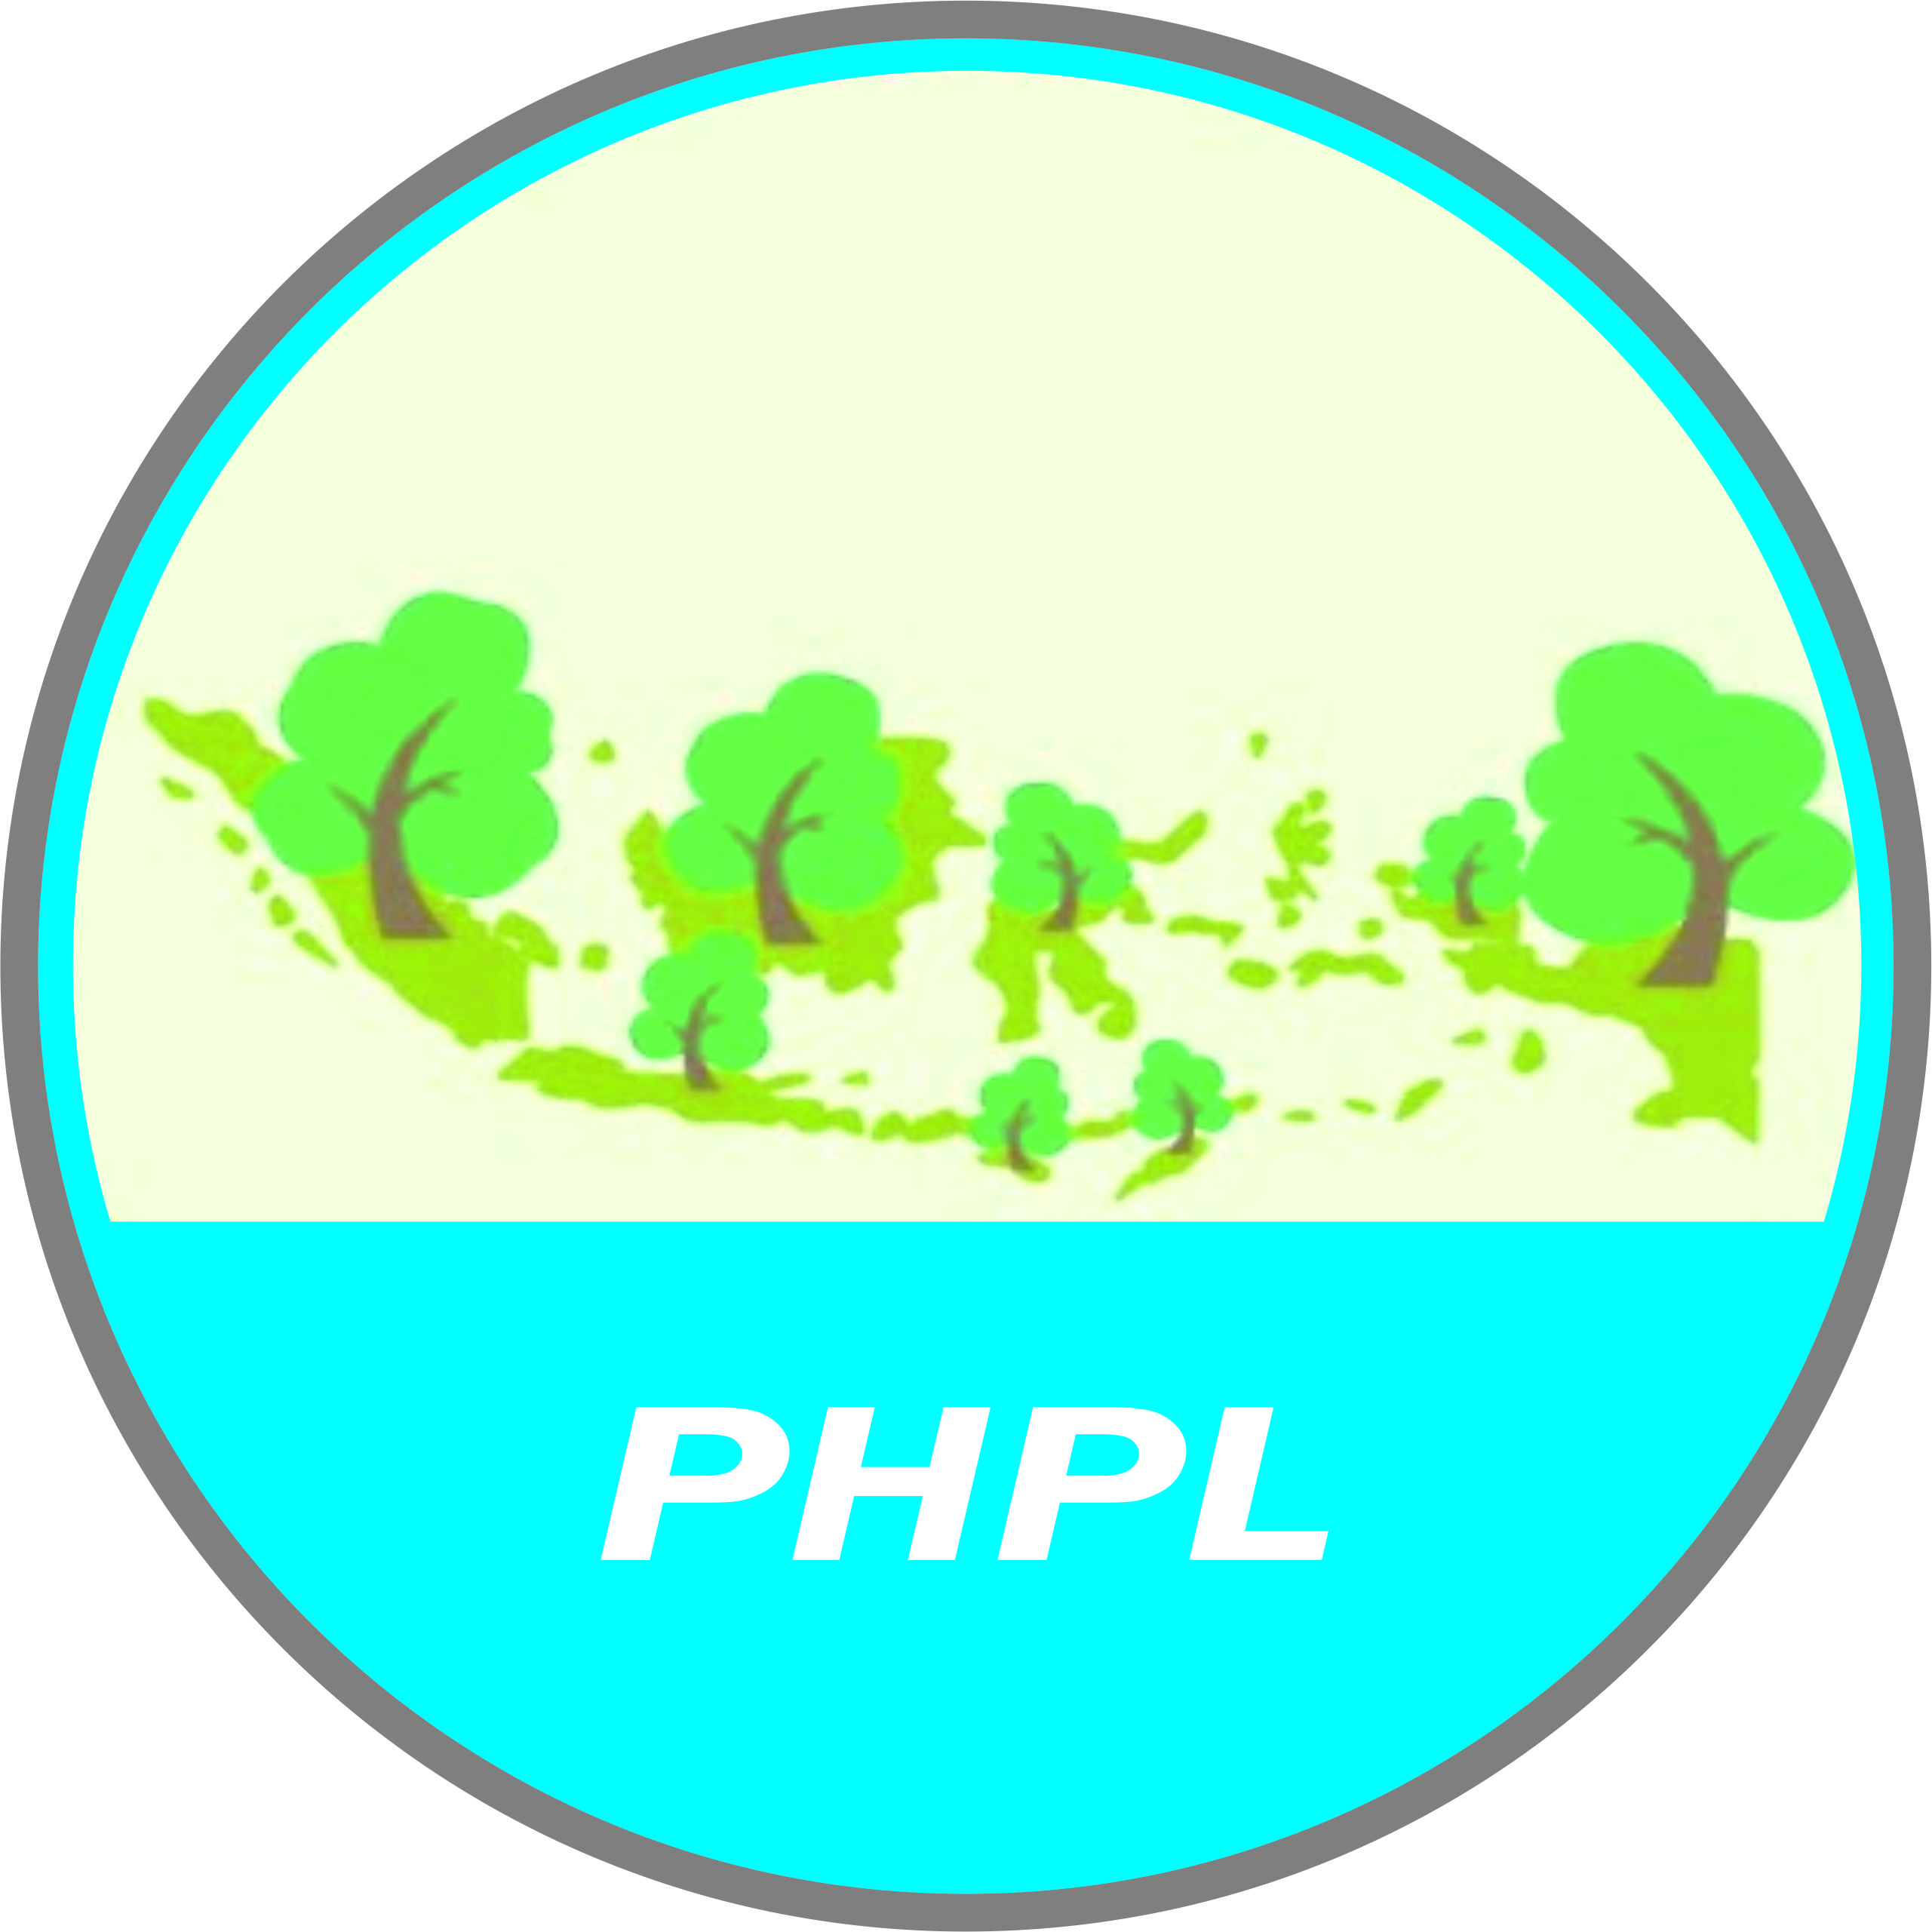 PHPL